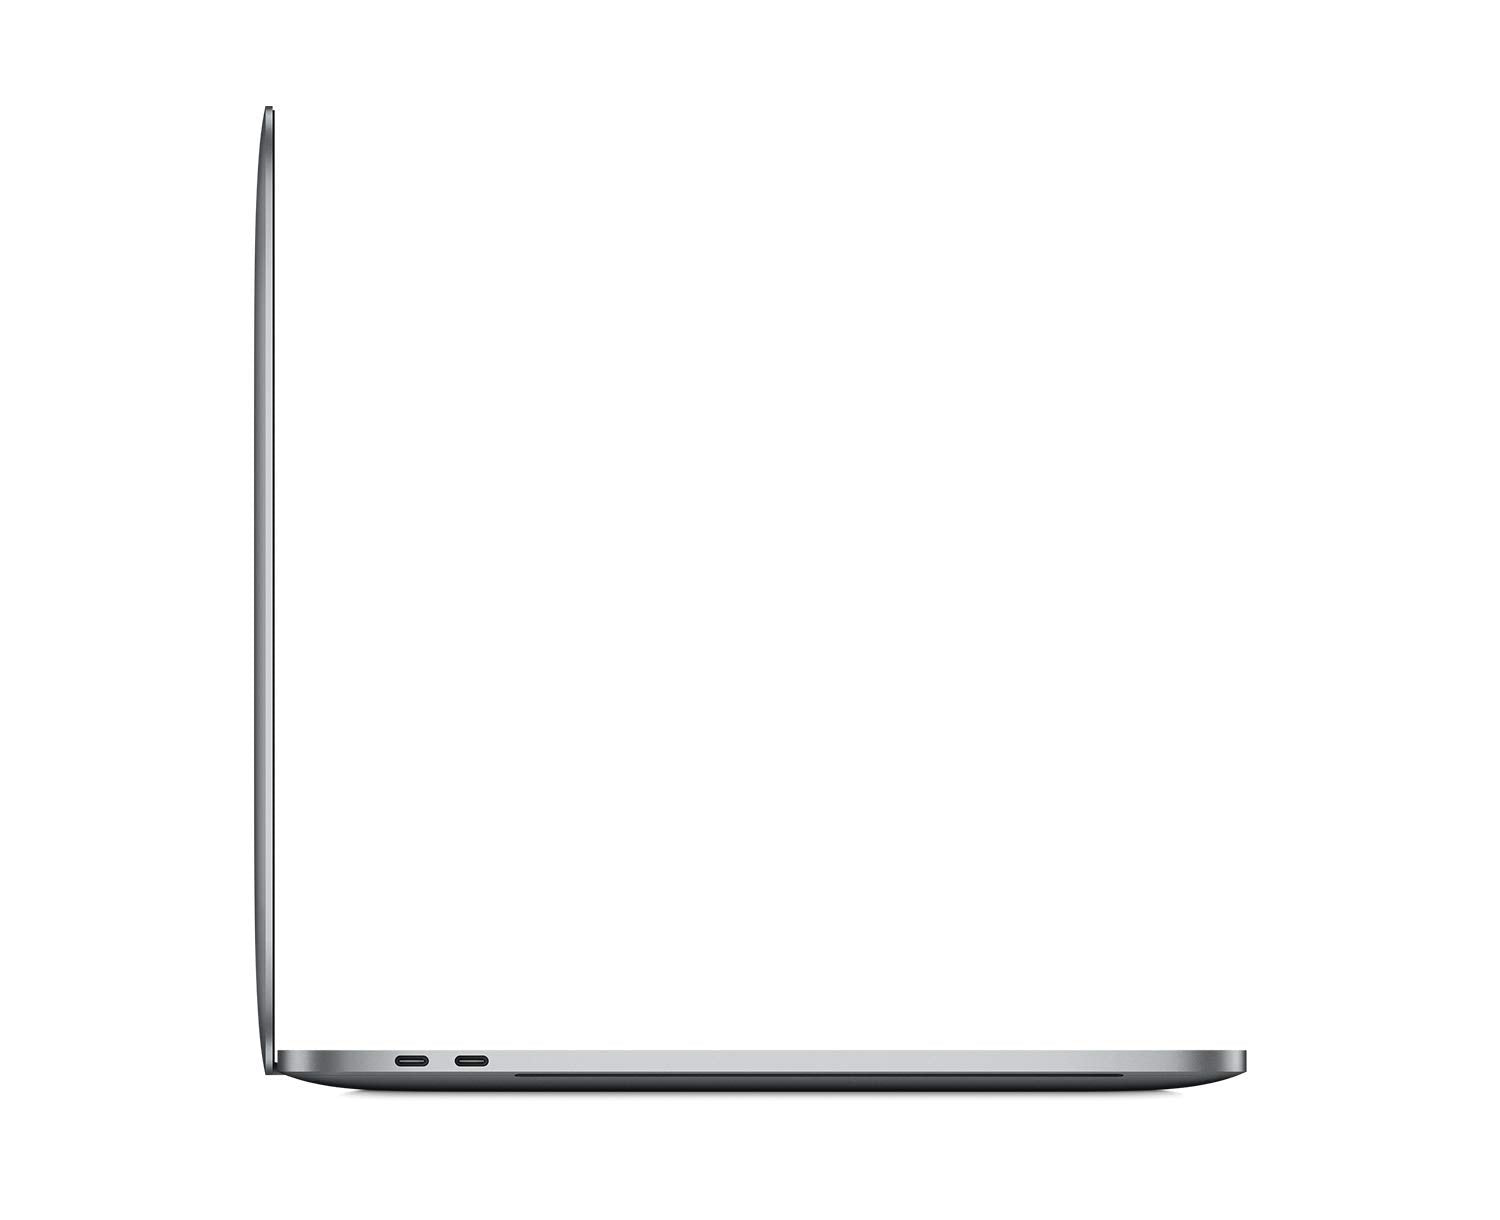 Apple MacBook Pro (15-inch, 2.6GHz 6-core 9th-generation Intel Core i7 processor, 256GB) - Space Grey (Latest Model)